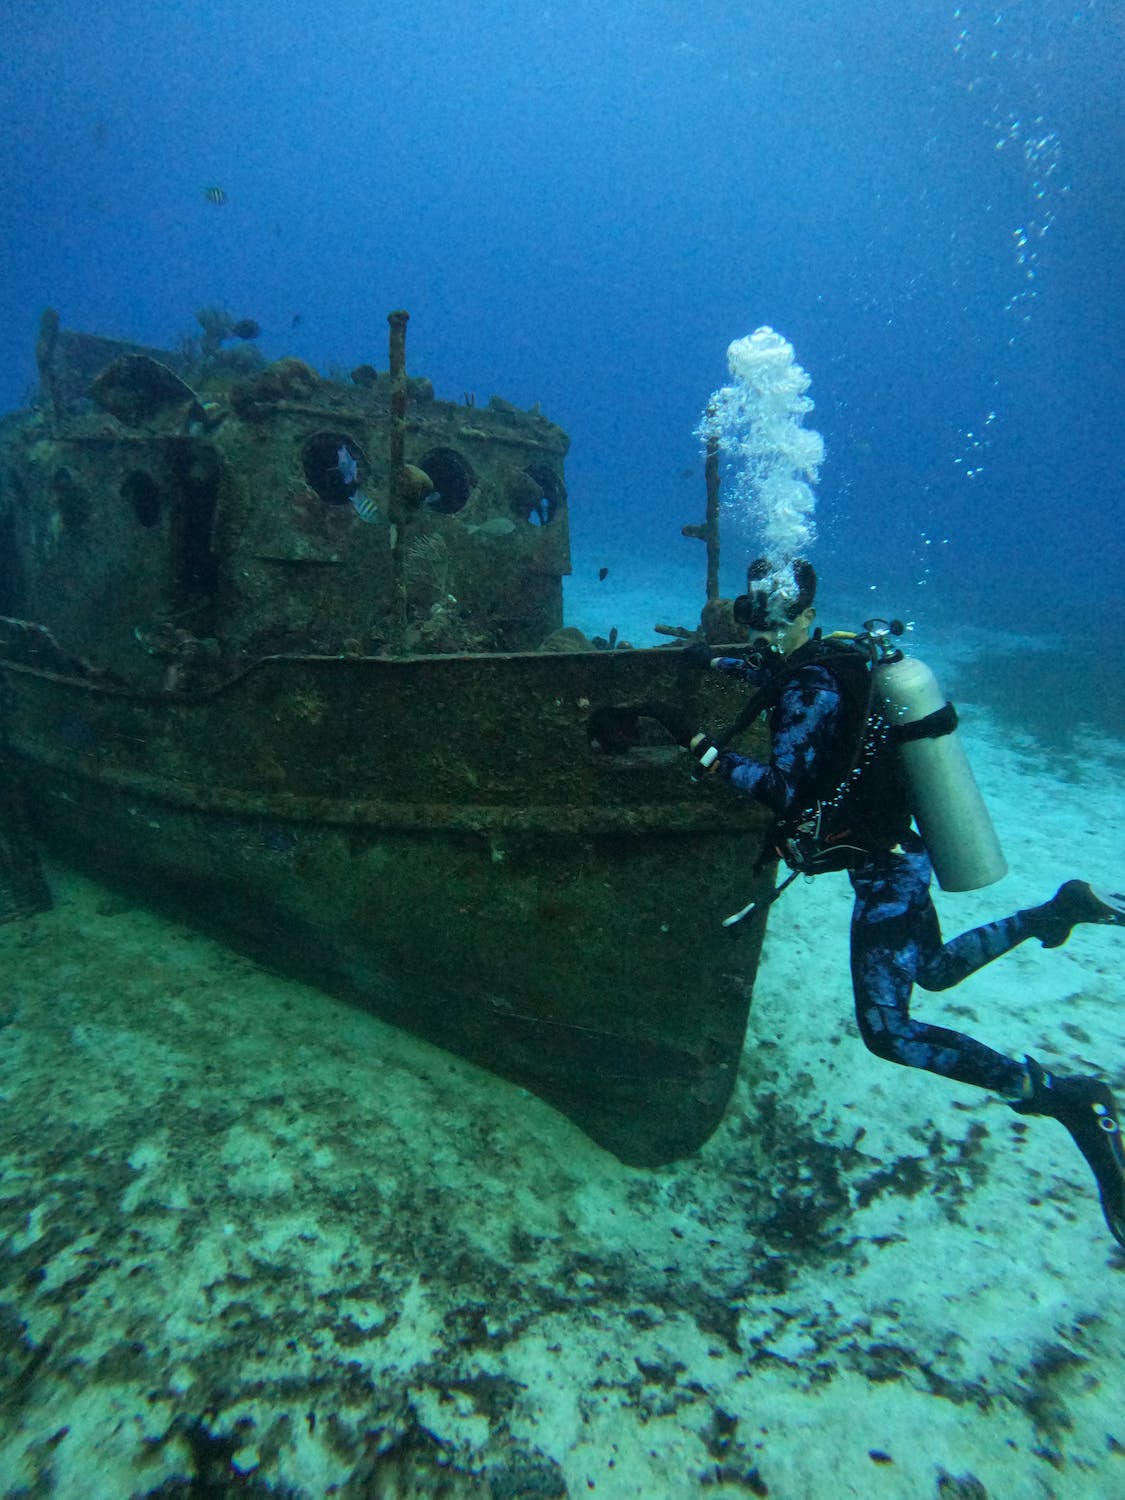 sunken ship and scuba diver